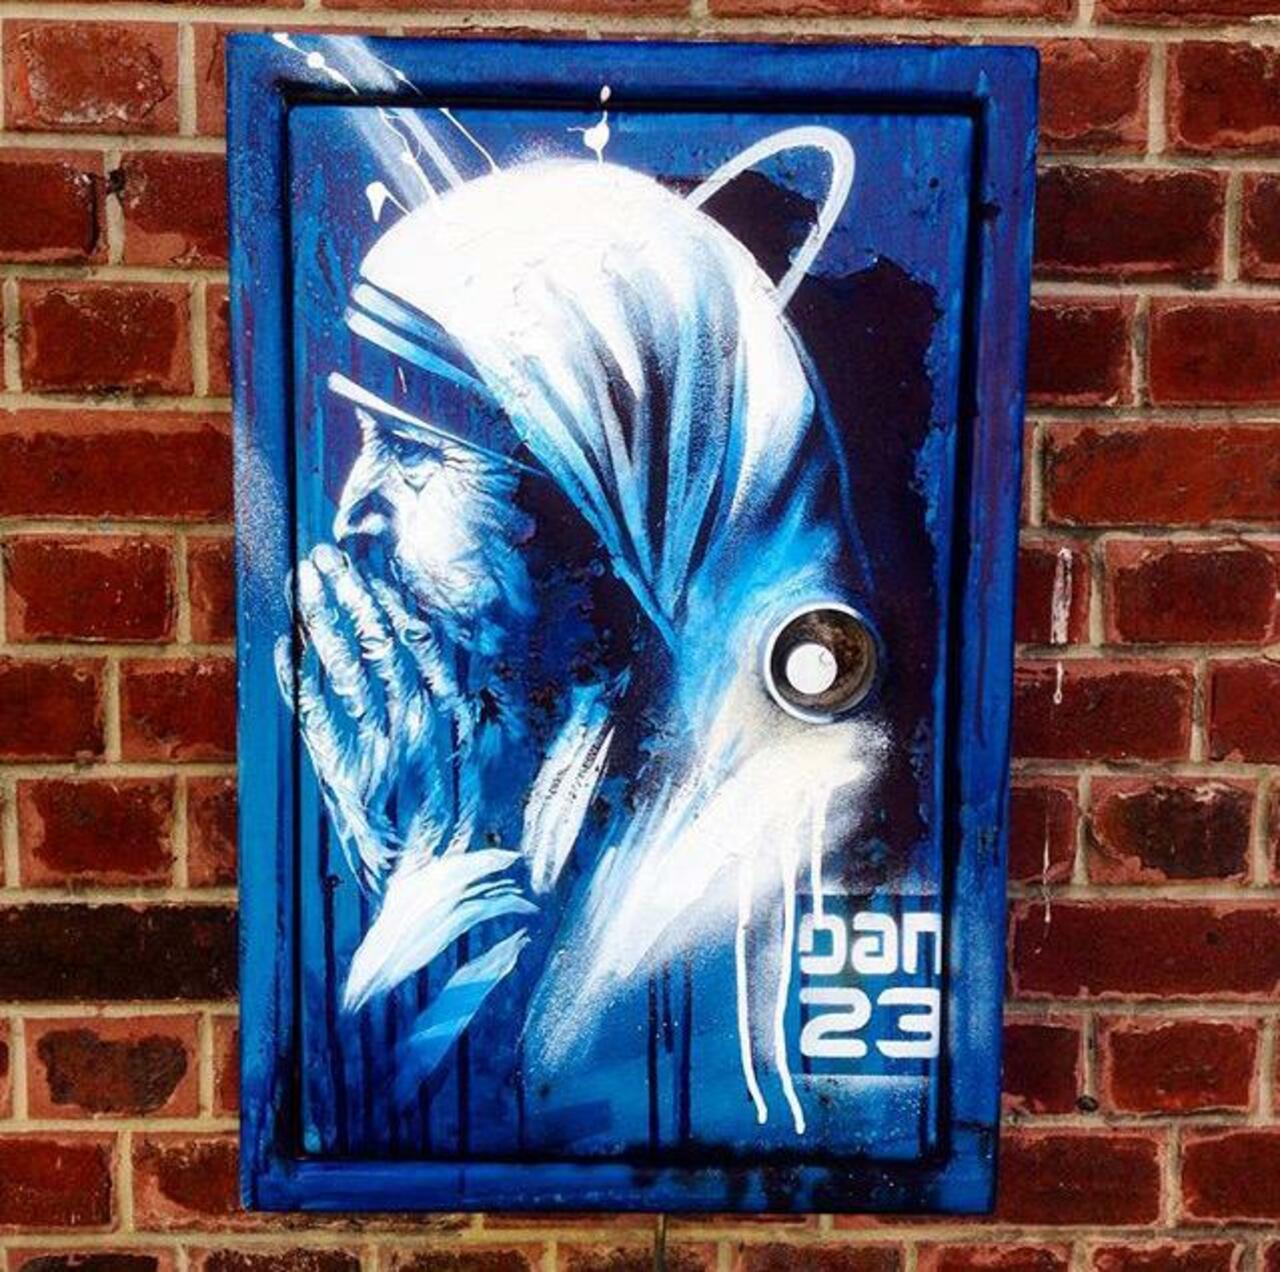 New Street Art 'Détail Spirit' by Dan23 #art #graffiti #mural #streetart http://t.co/PtrgxEwYME … http://twitter.com/charlesjackso14/status/649560758255288321